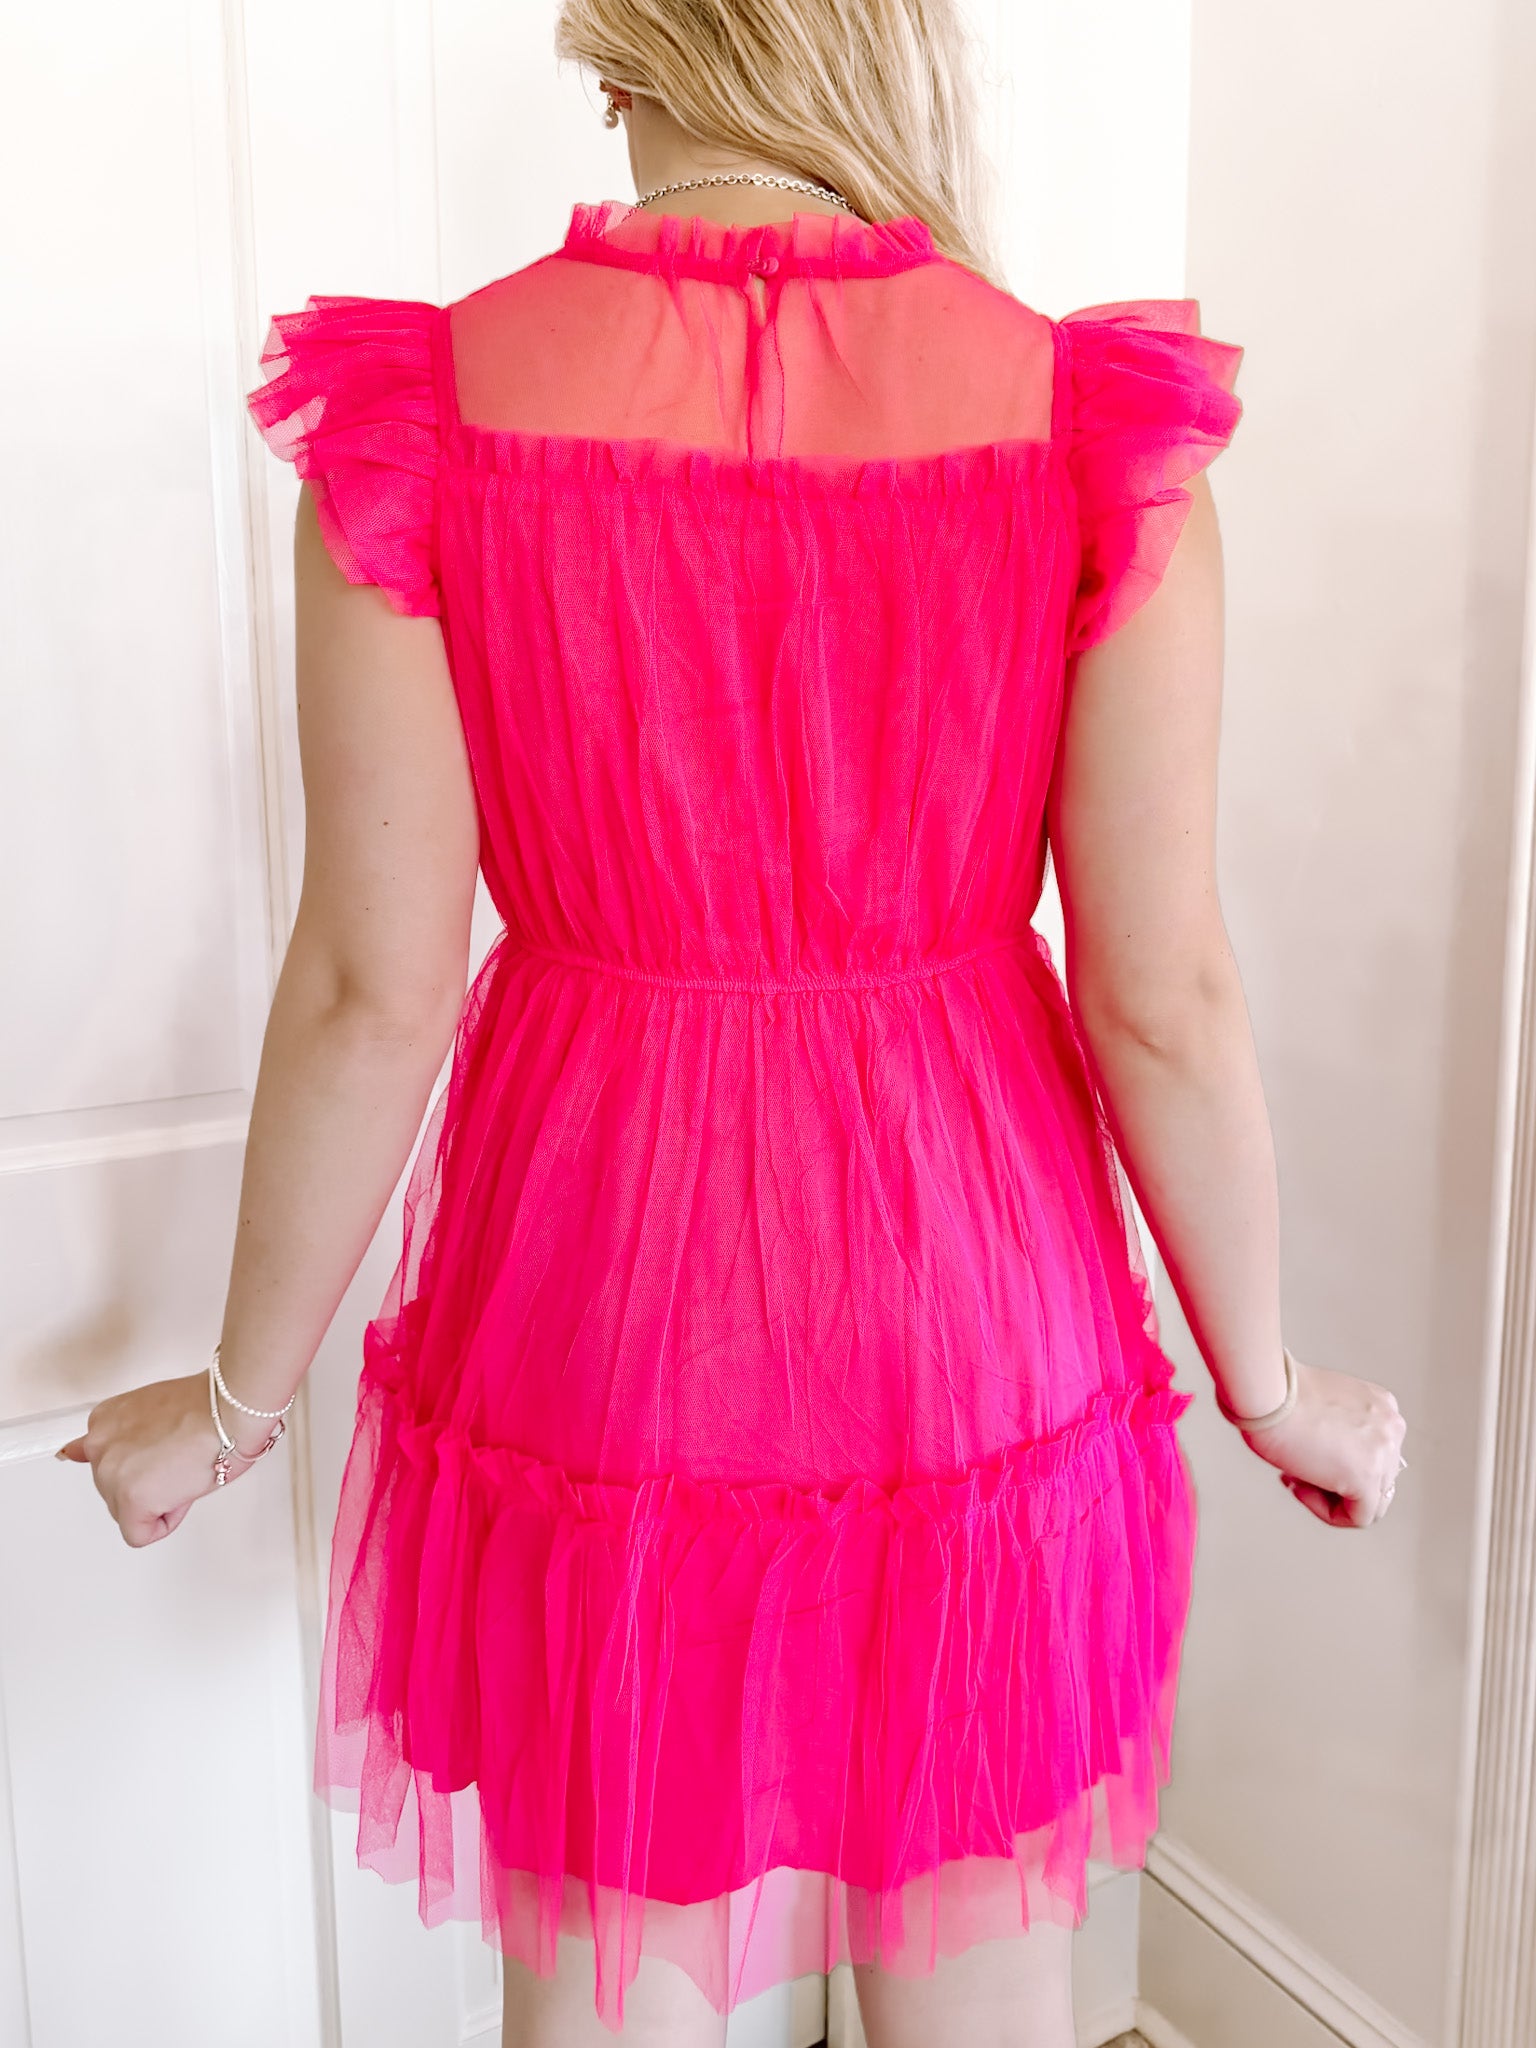 Drop it Like it's Hot Pink Dress | sassyshortcake.com | Sassy Shortcake